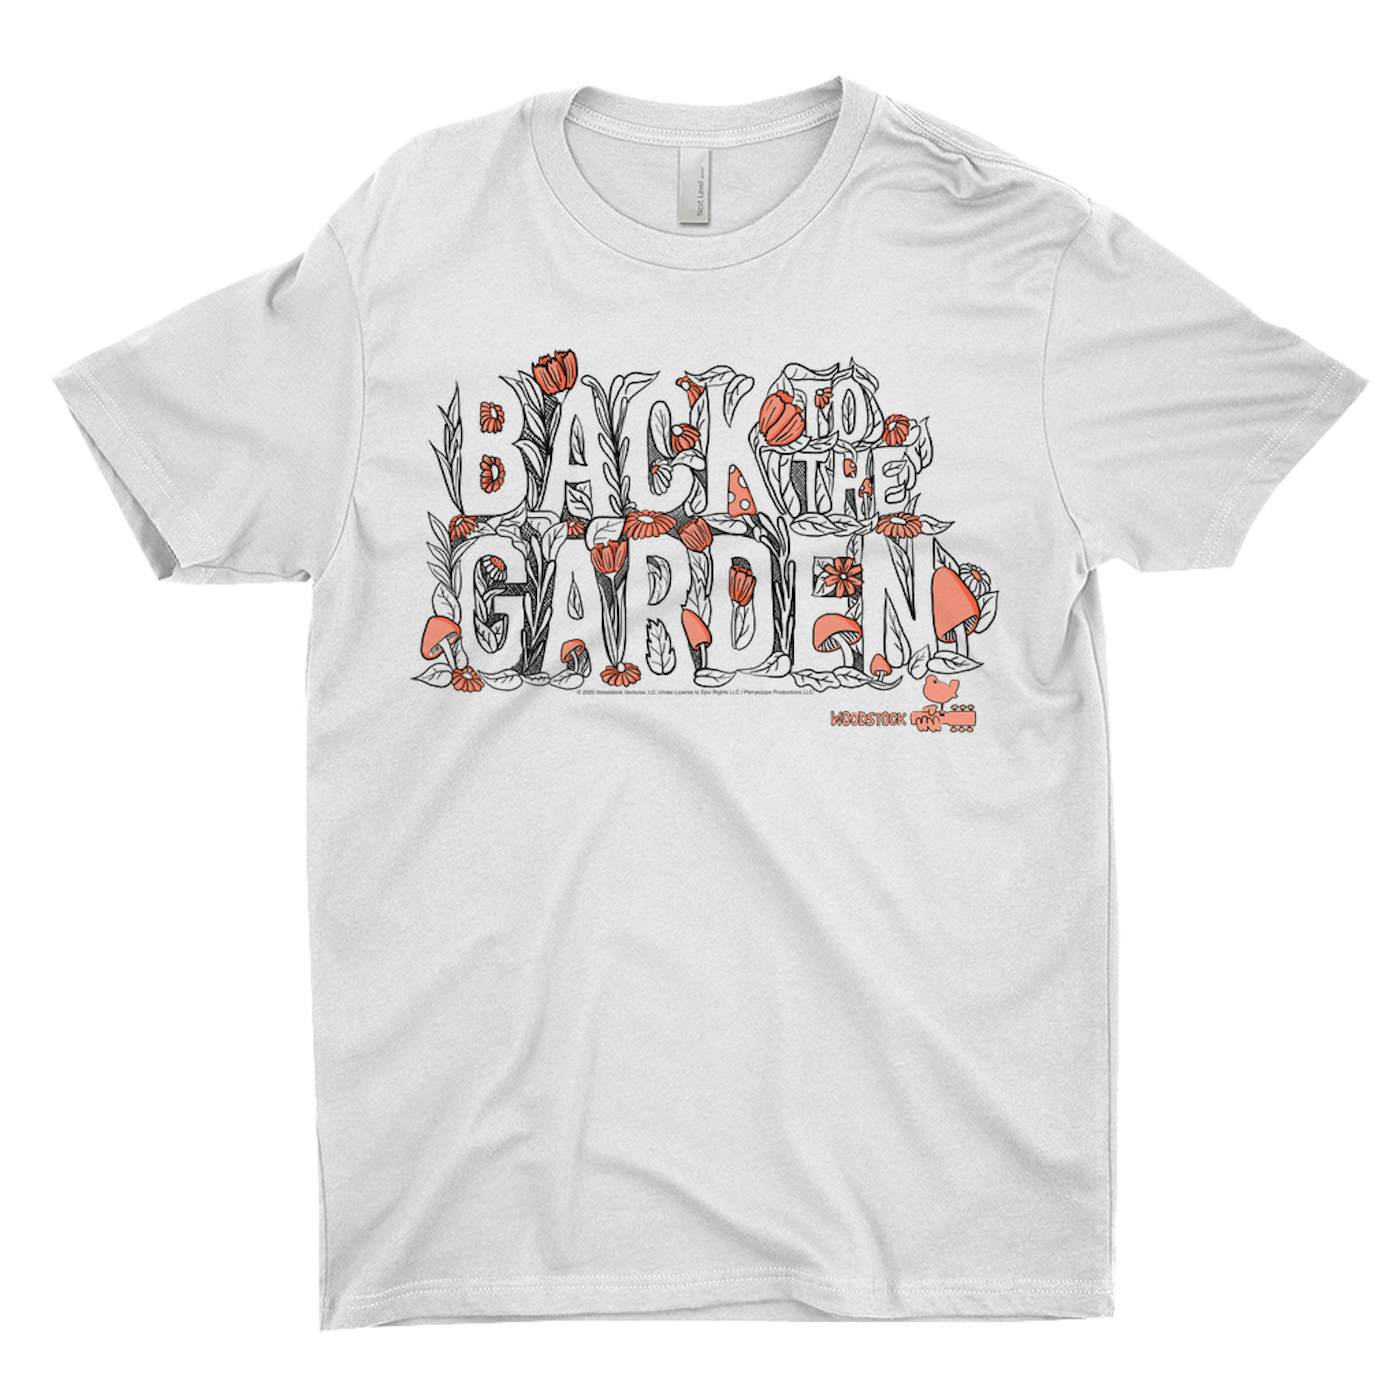 Woodstock T-Shirt | Back To The Garden Woodstock Shirt